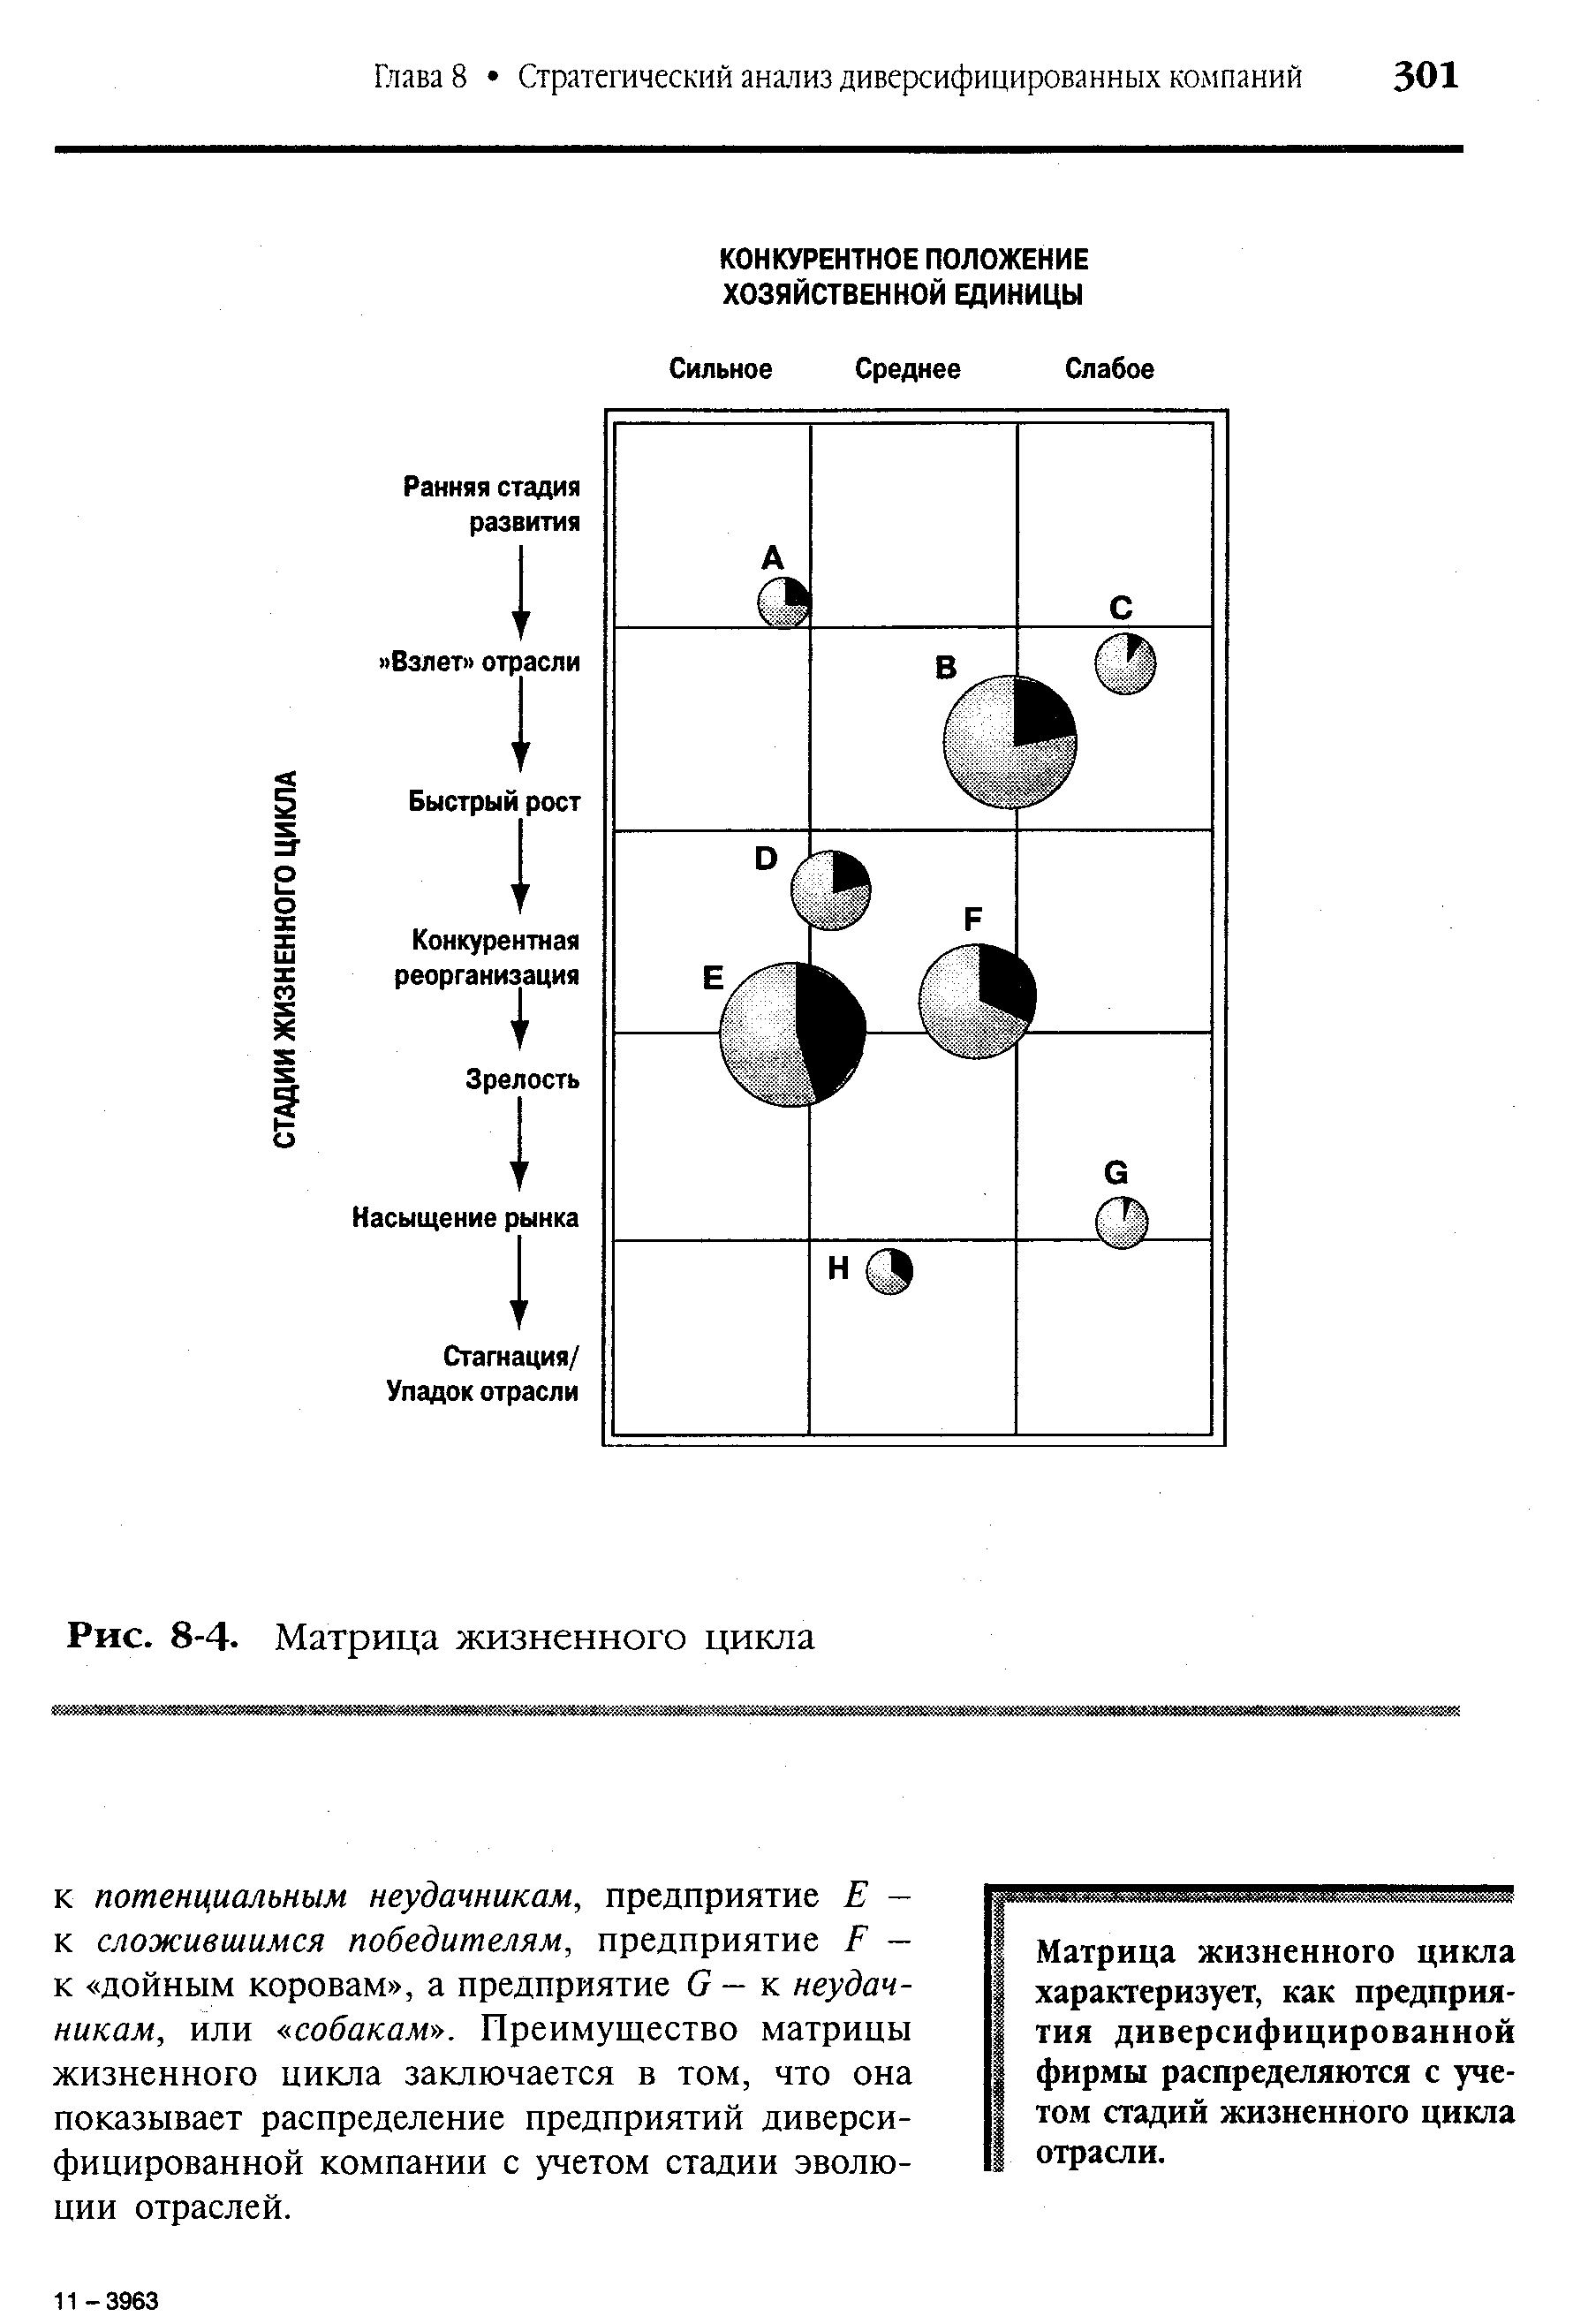 Рис. 8-4. Матрица жизненного цикла
